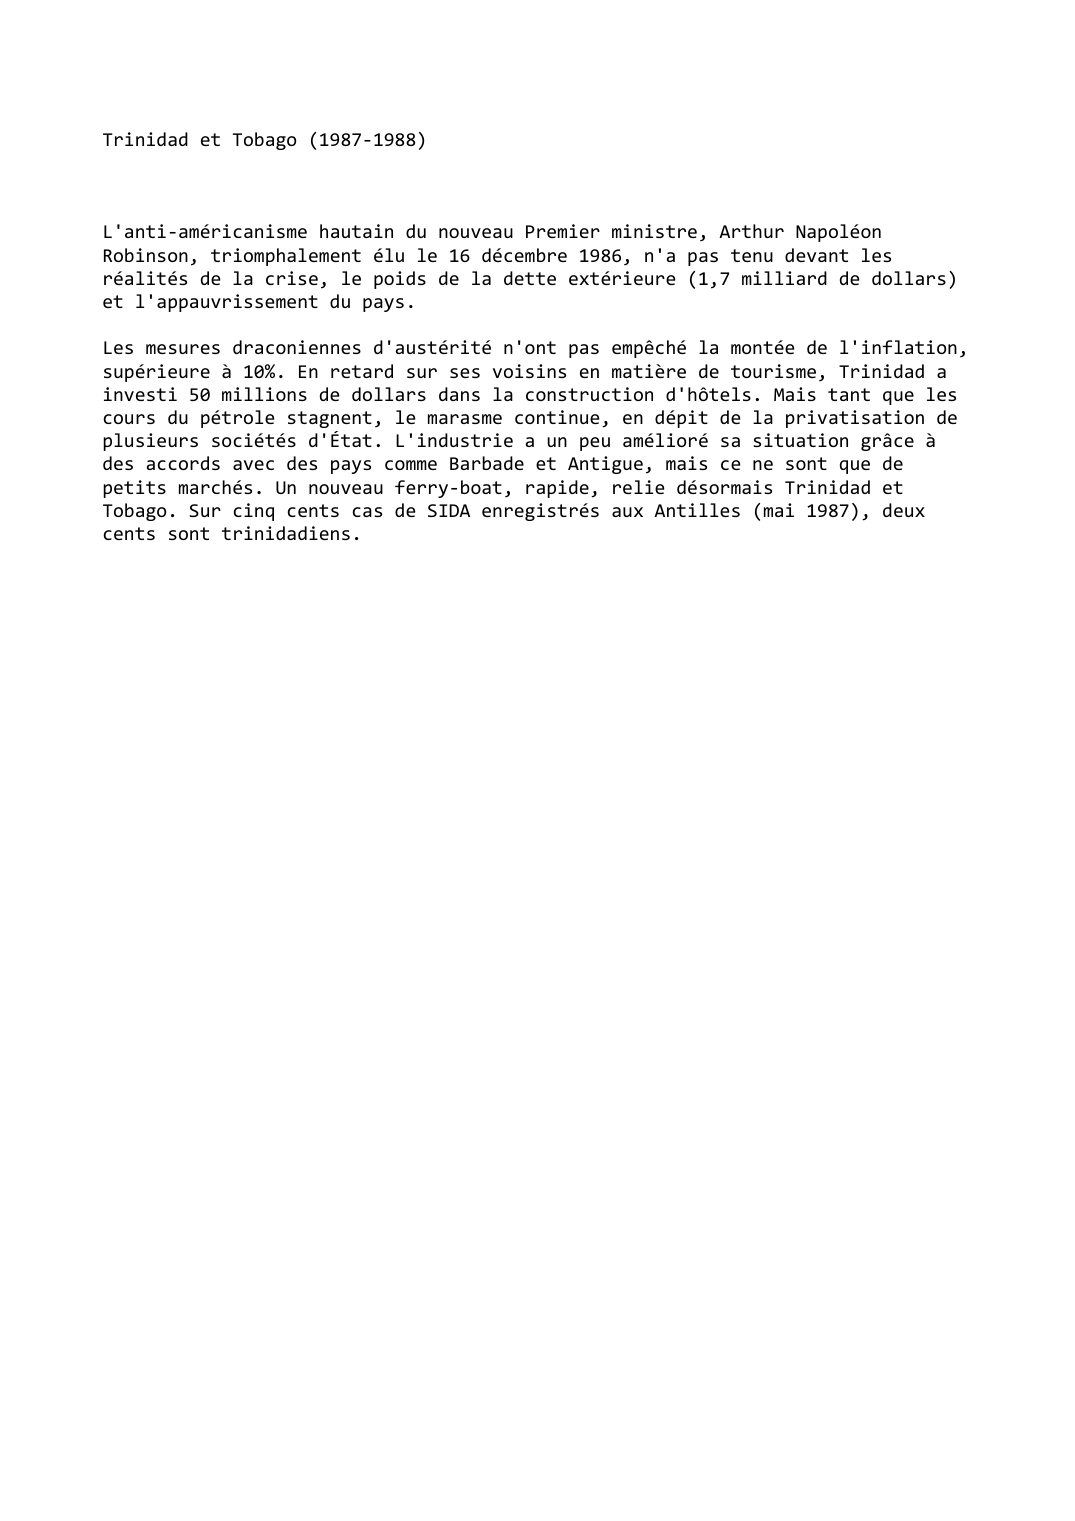 Prévisualisation du document Trinidad et Tobago (1987-1988)